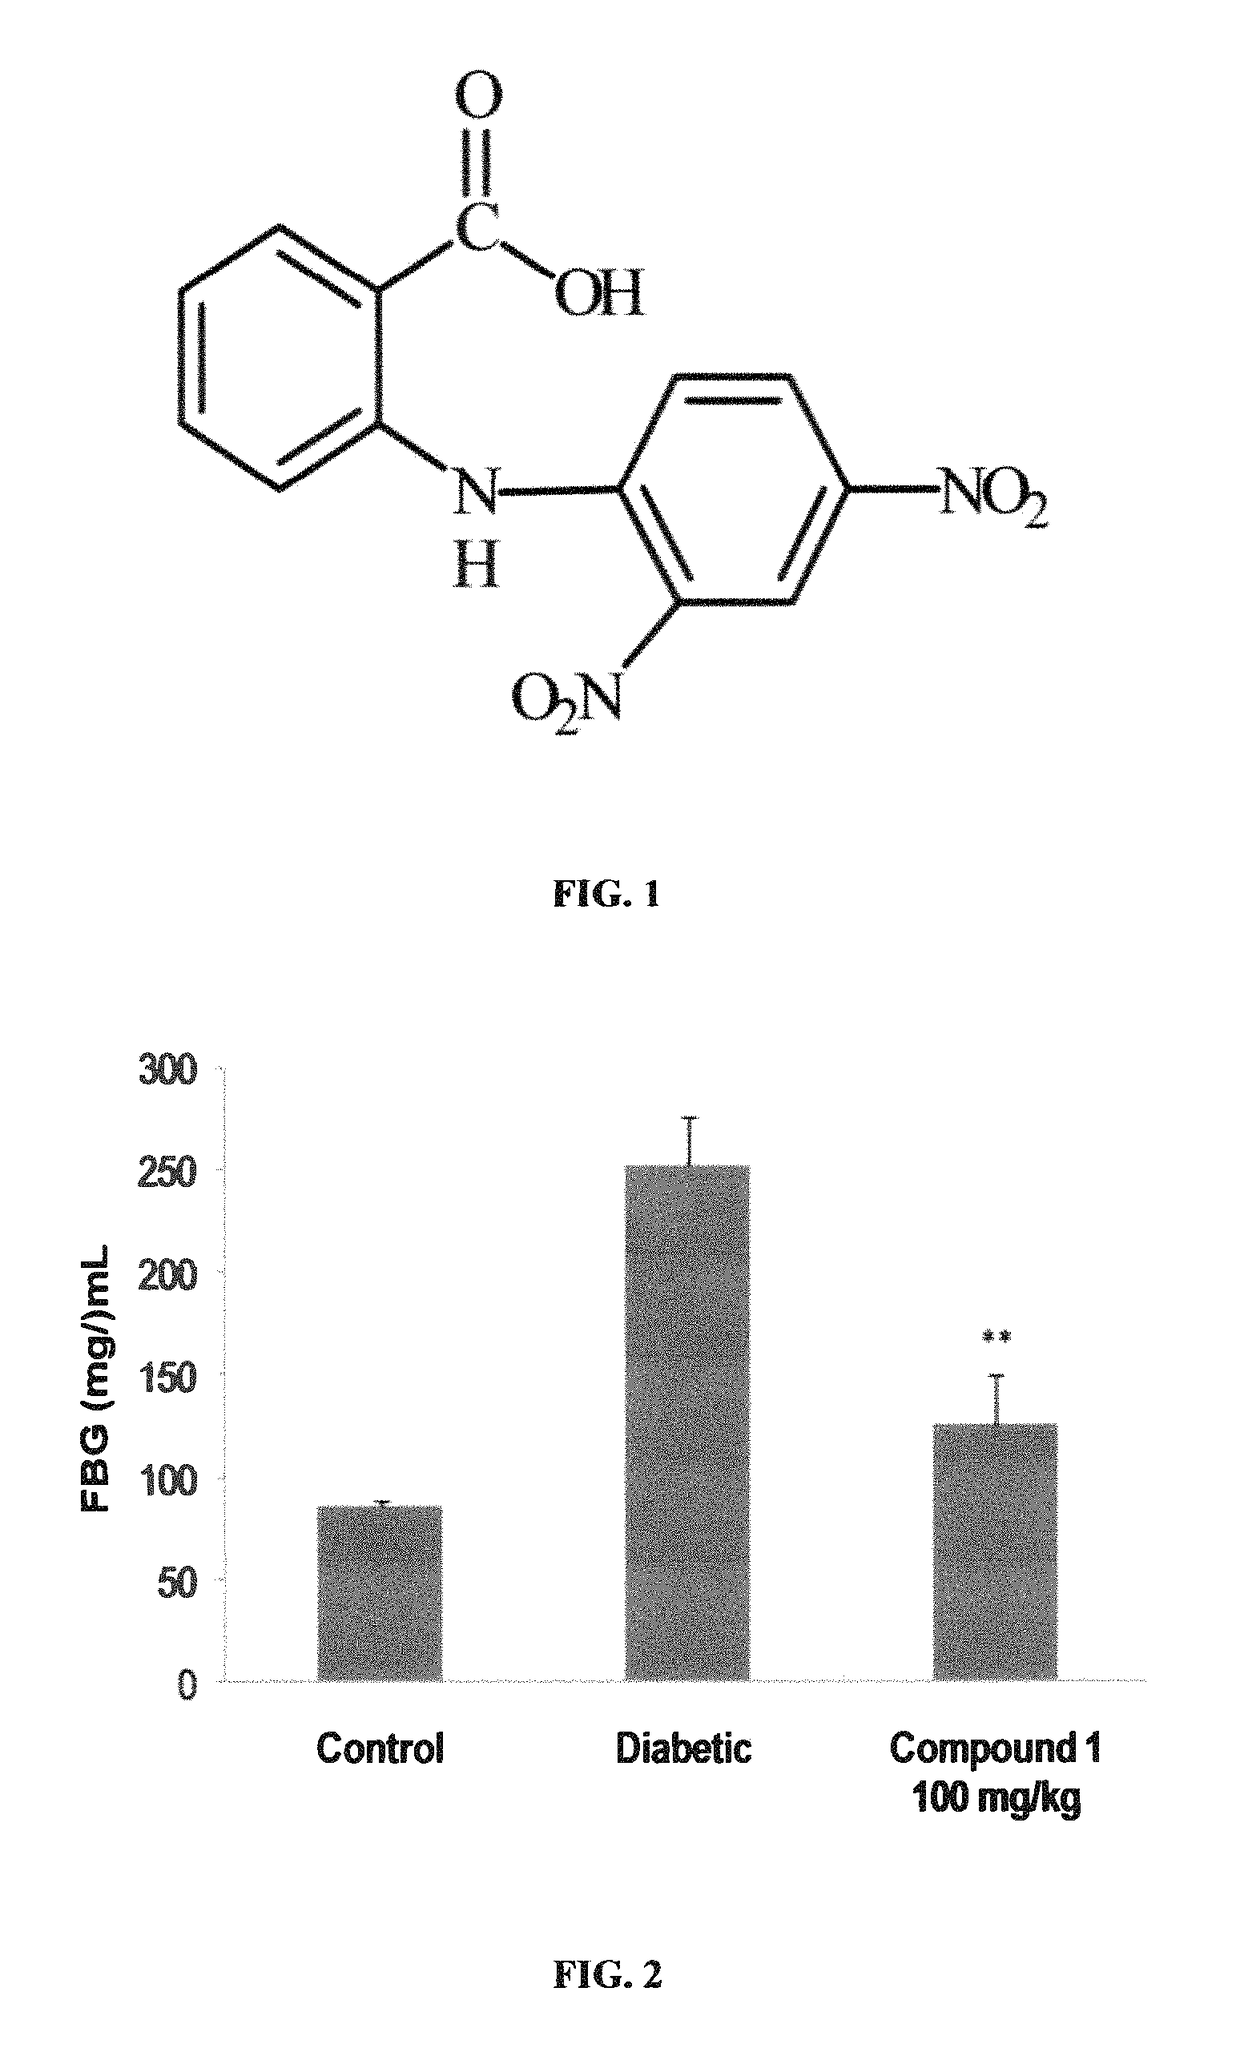 2, 4-dinitroanilino-benzoic acid: novel insulinotropic agent for the treatment of diabetes